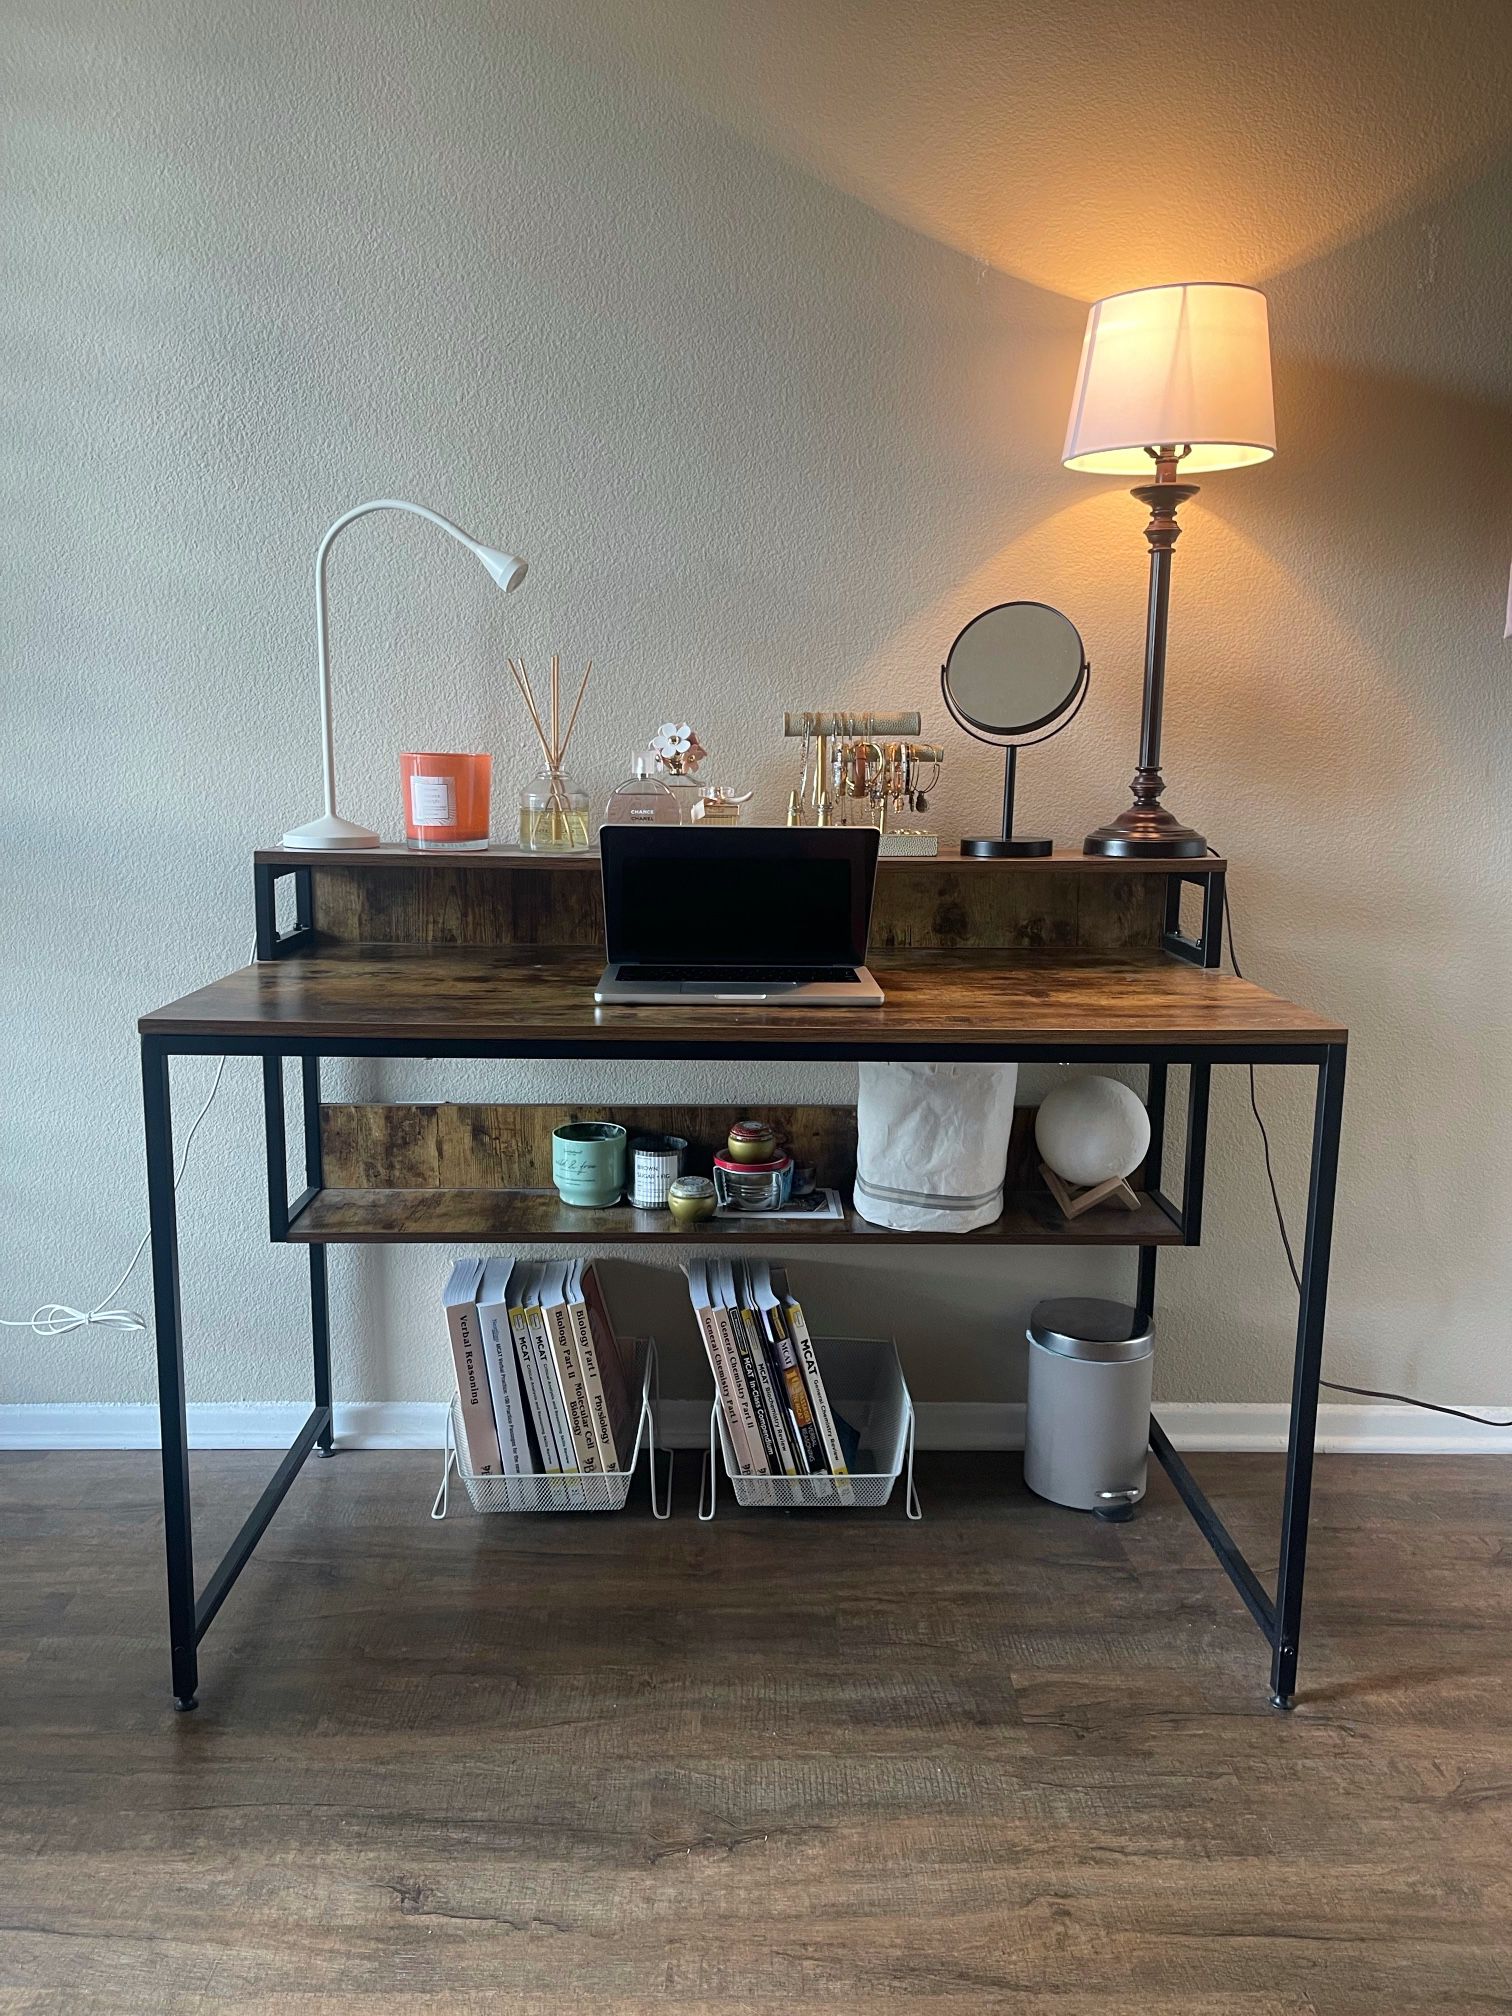 Home Office/Decorative Desk